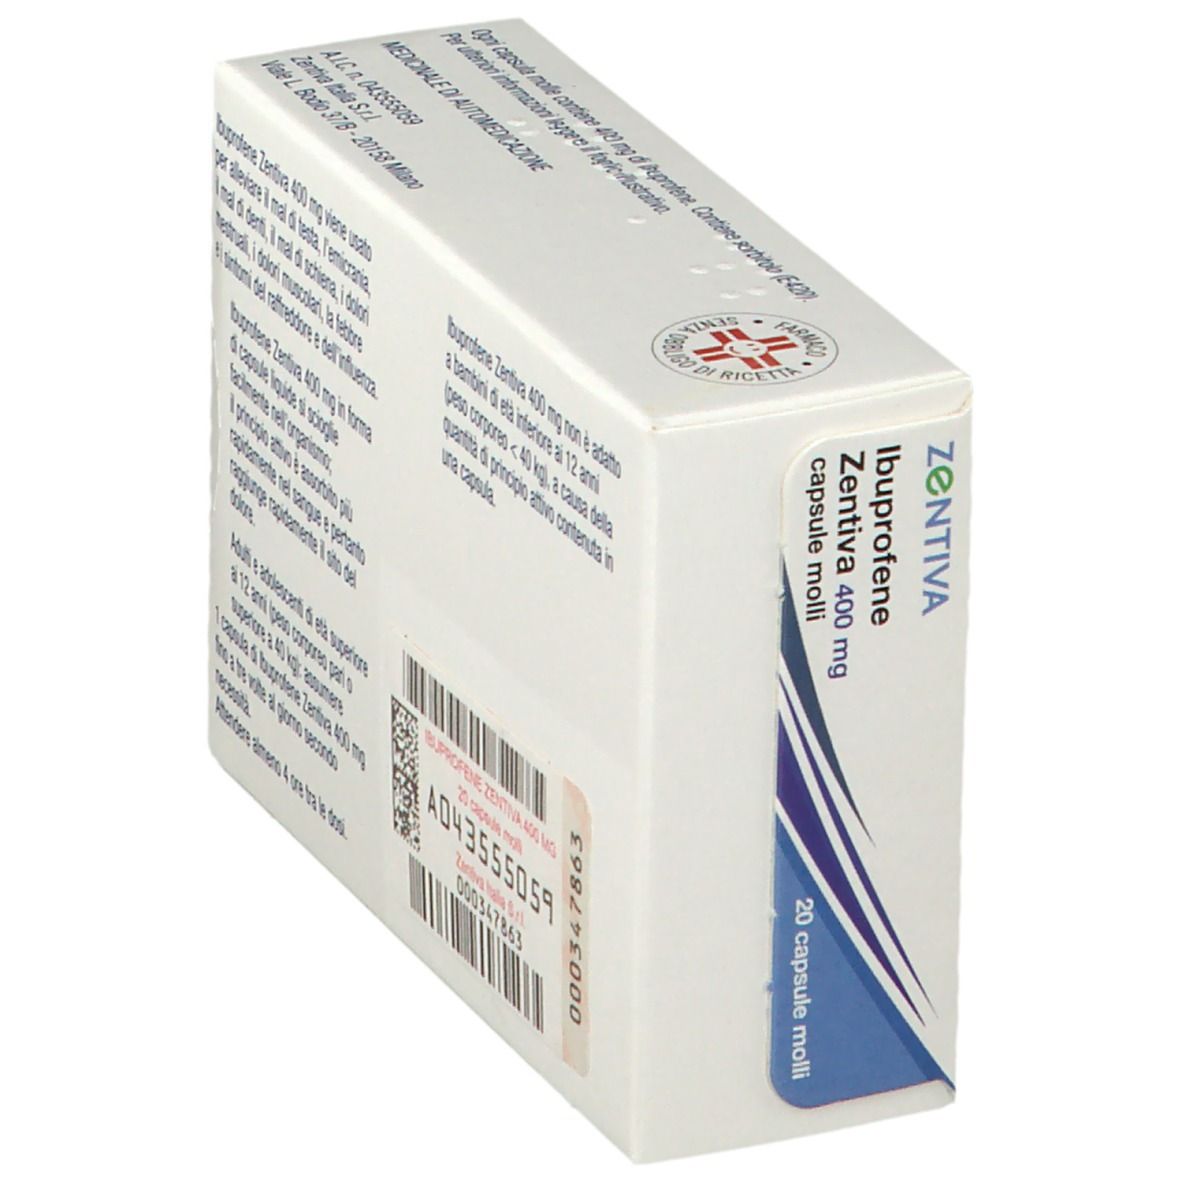 Ibuprofene Zentiva 400 mg 20 Capsule molli